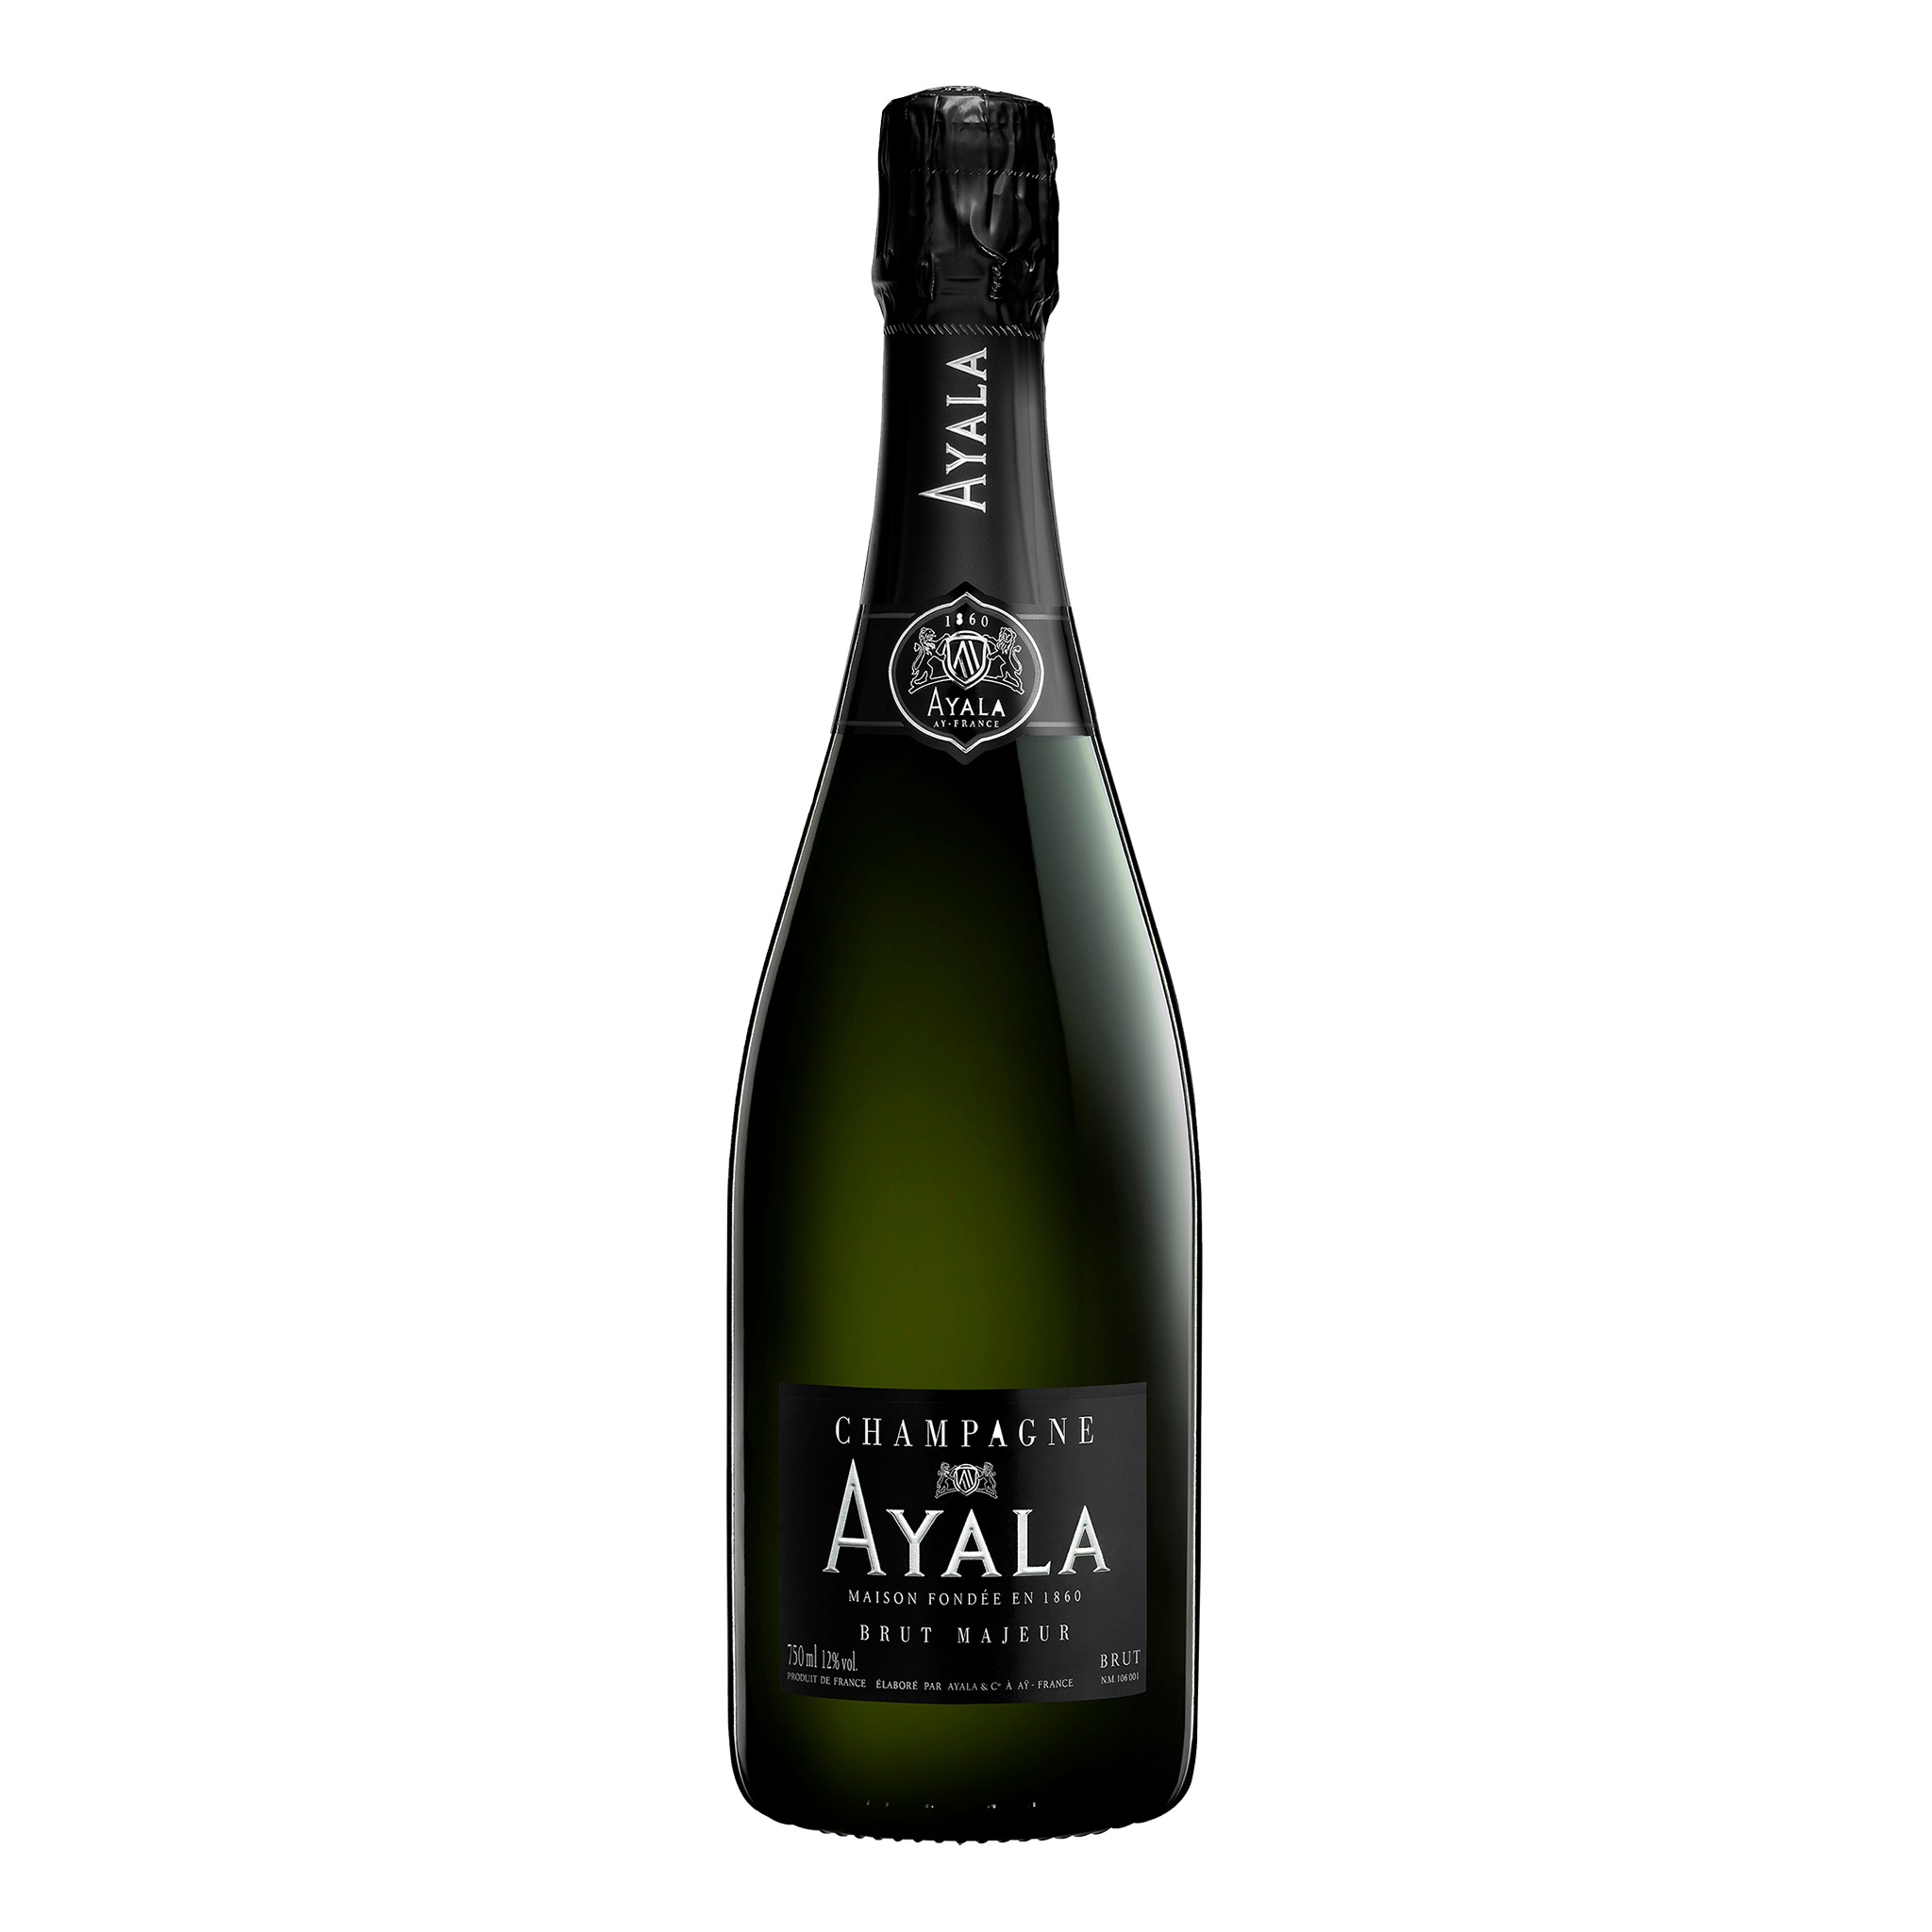 Ayala Brut Majeur Champagne NV